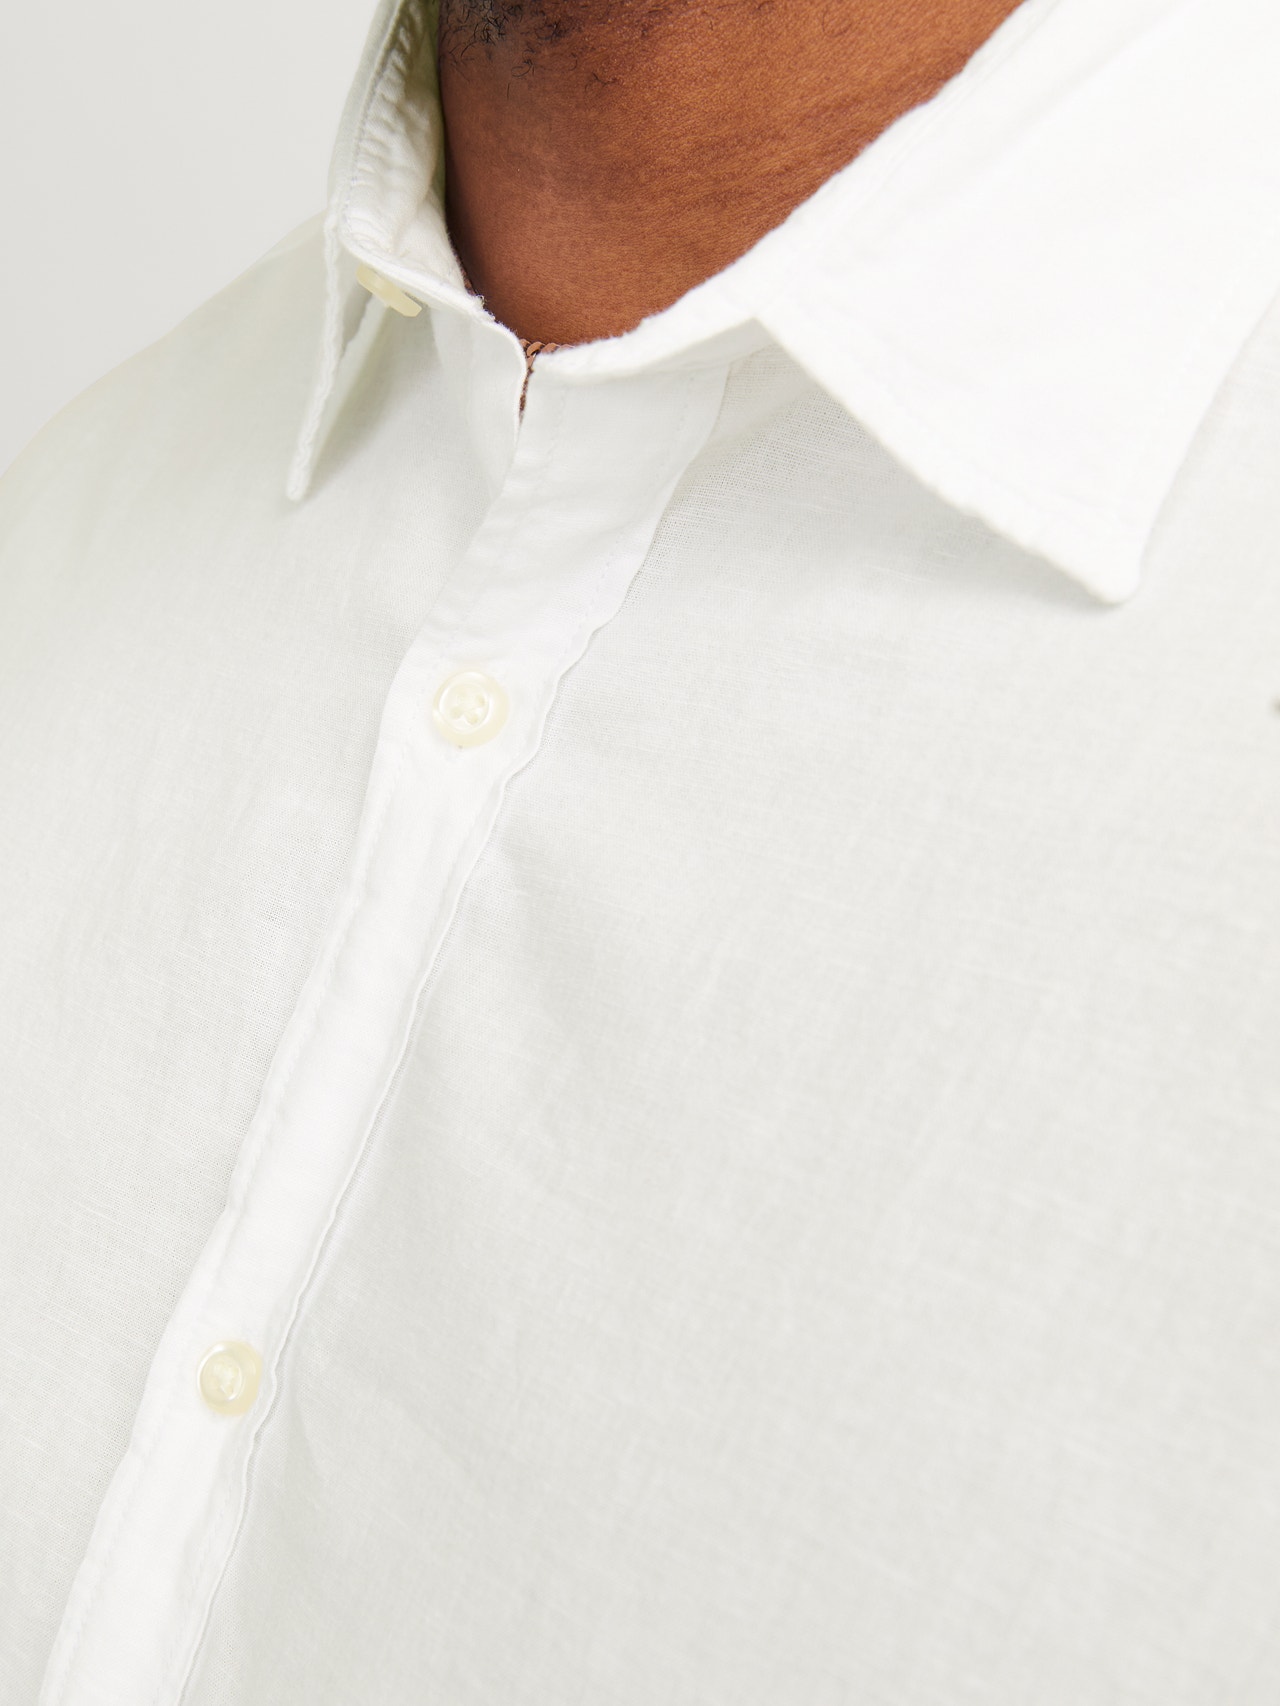 Jack & Jones Plus Size Slim Fit Shirt -White - 12253720